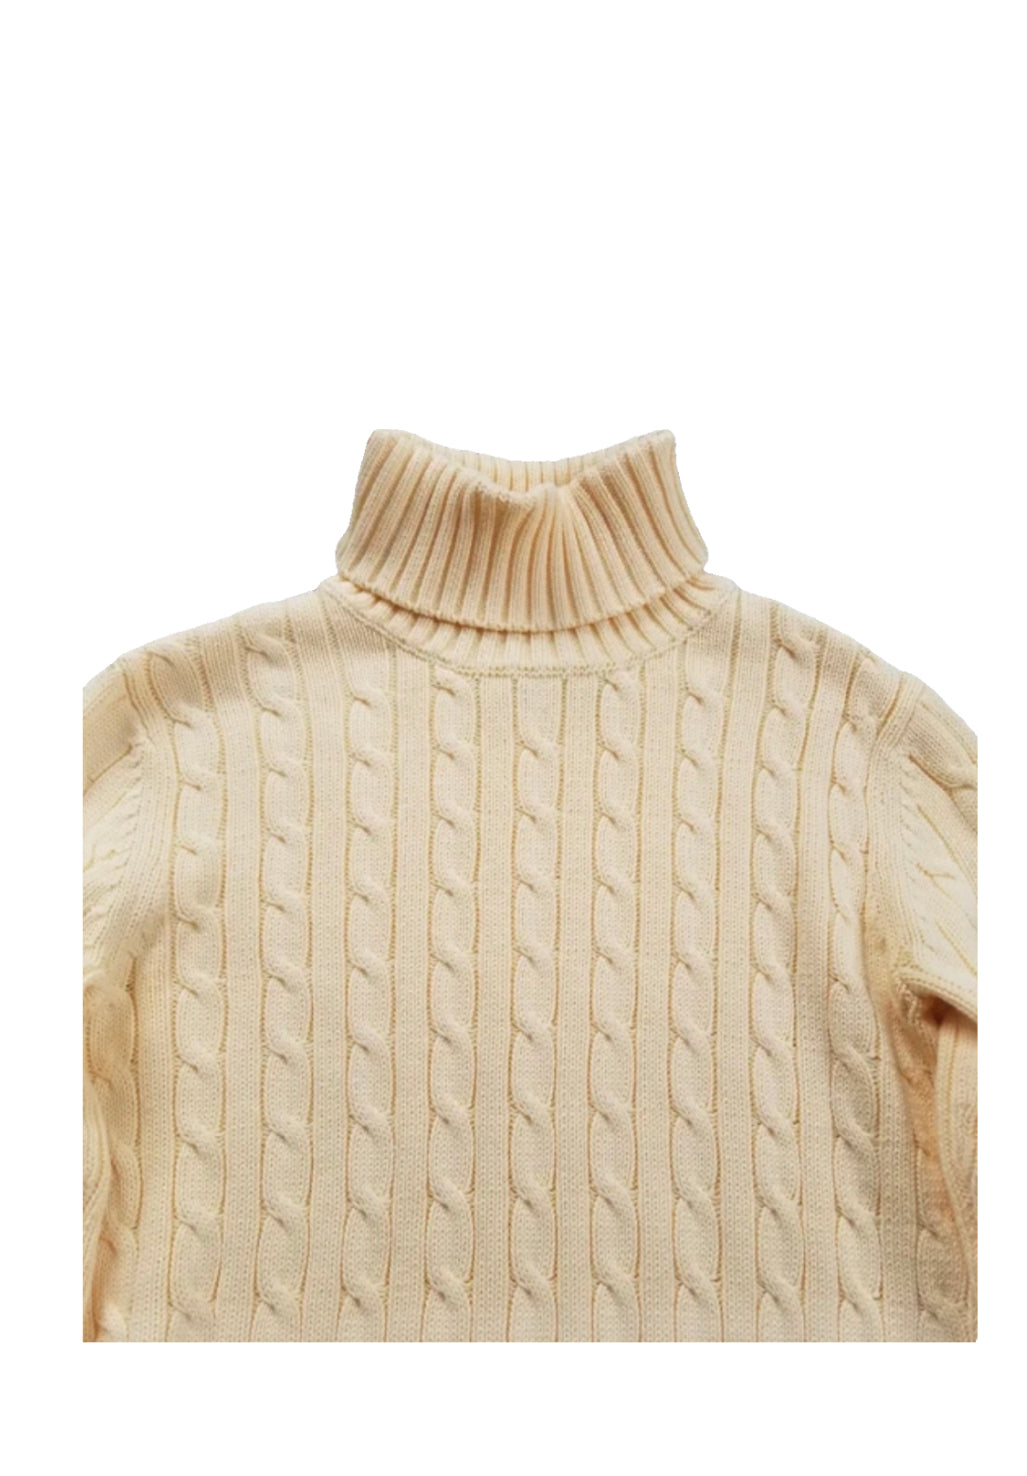 Tommy Hilfiger vintage knit woollen turtleneck jumper sweater pale yellow . close up of neck